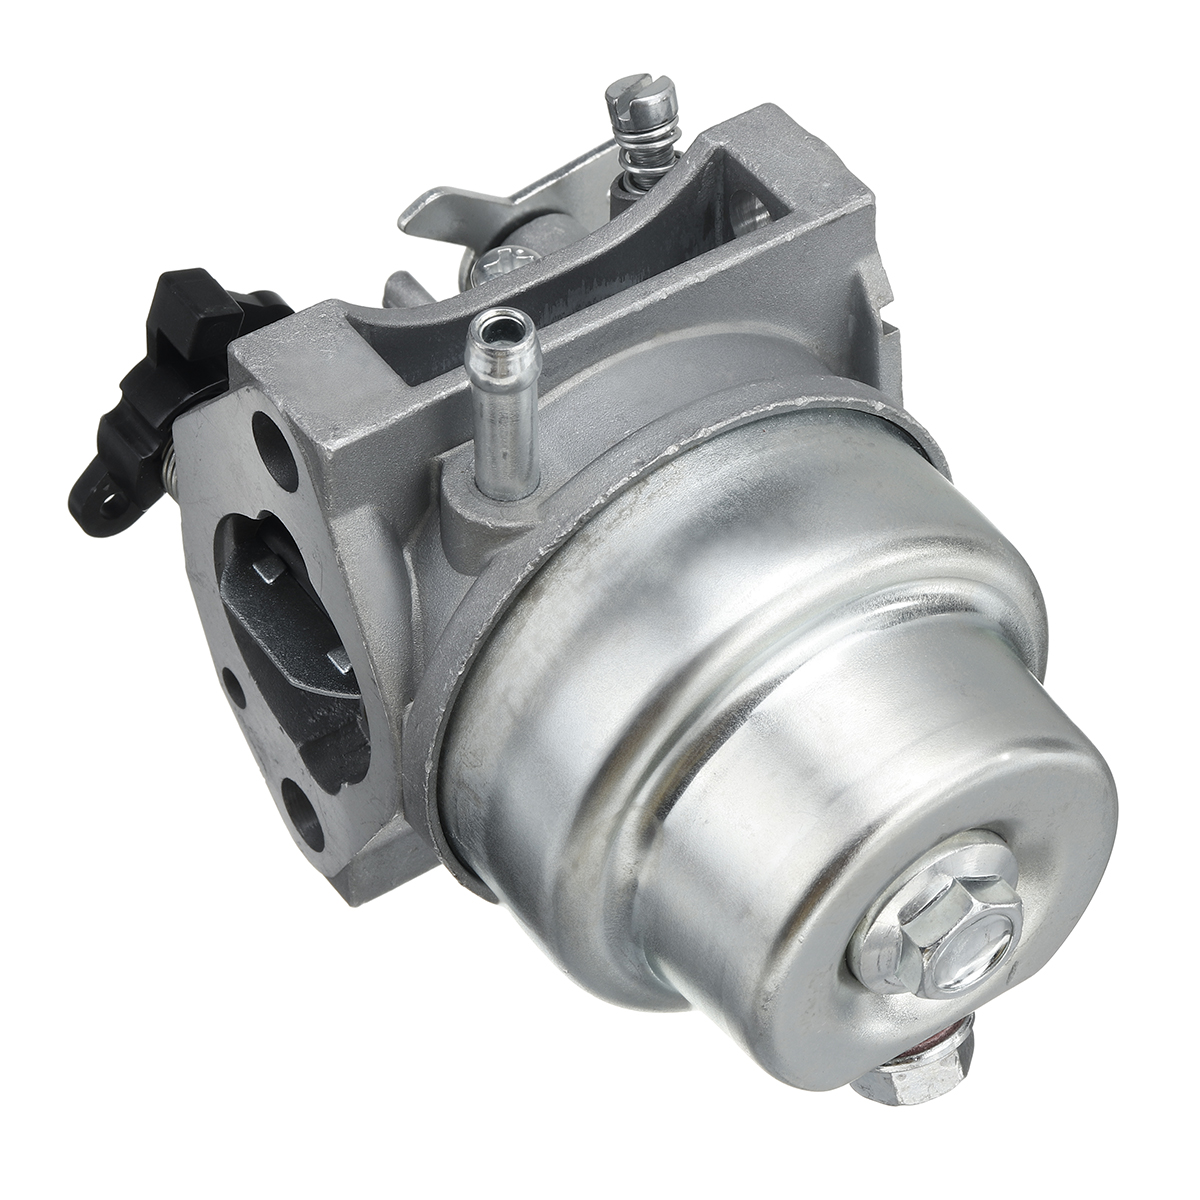 Carburetor-Intake-Kit-Air-Filter-Gaskets-with-Fuel-Line-for-Honda-GCV160-GCV135-Mower-Engine-HRU19R--1842970-5